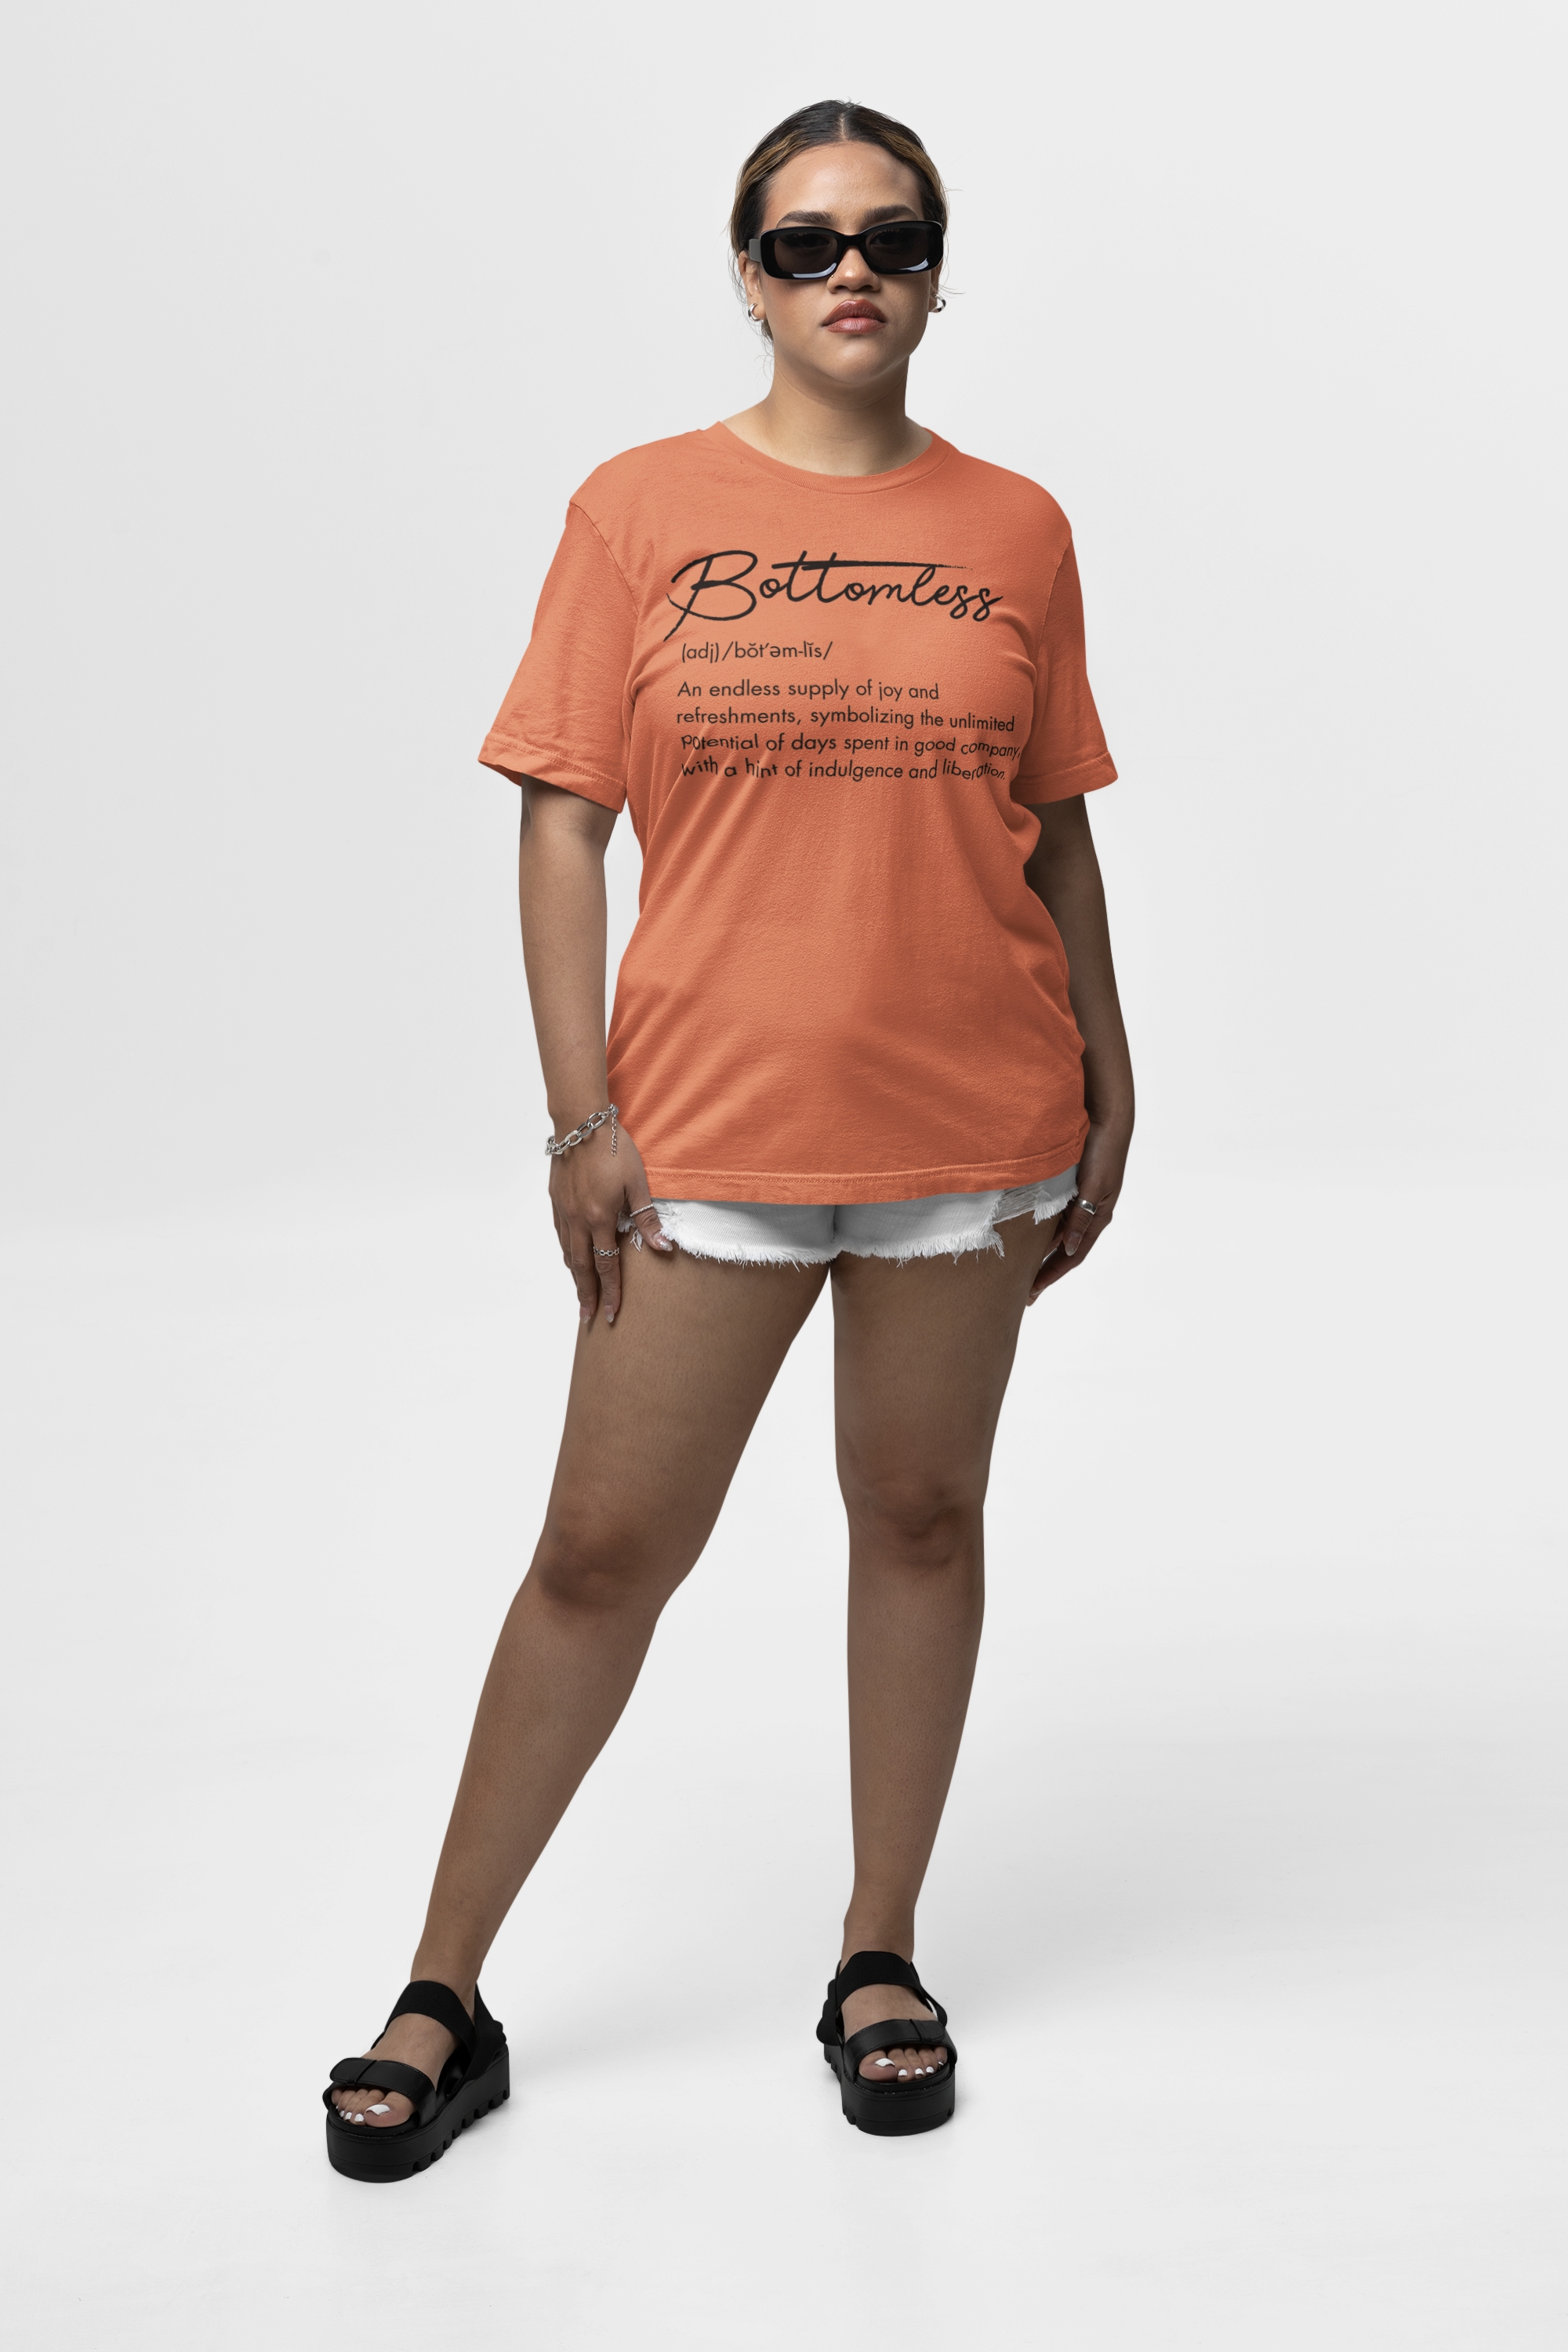 Bottomless Typography Unisex T-Shirt